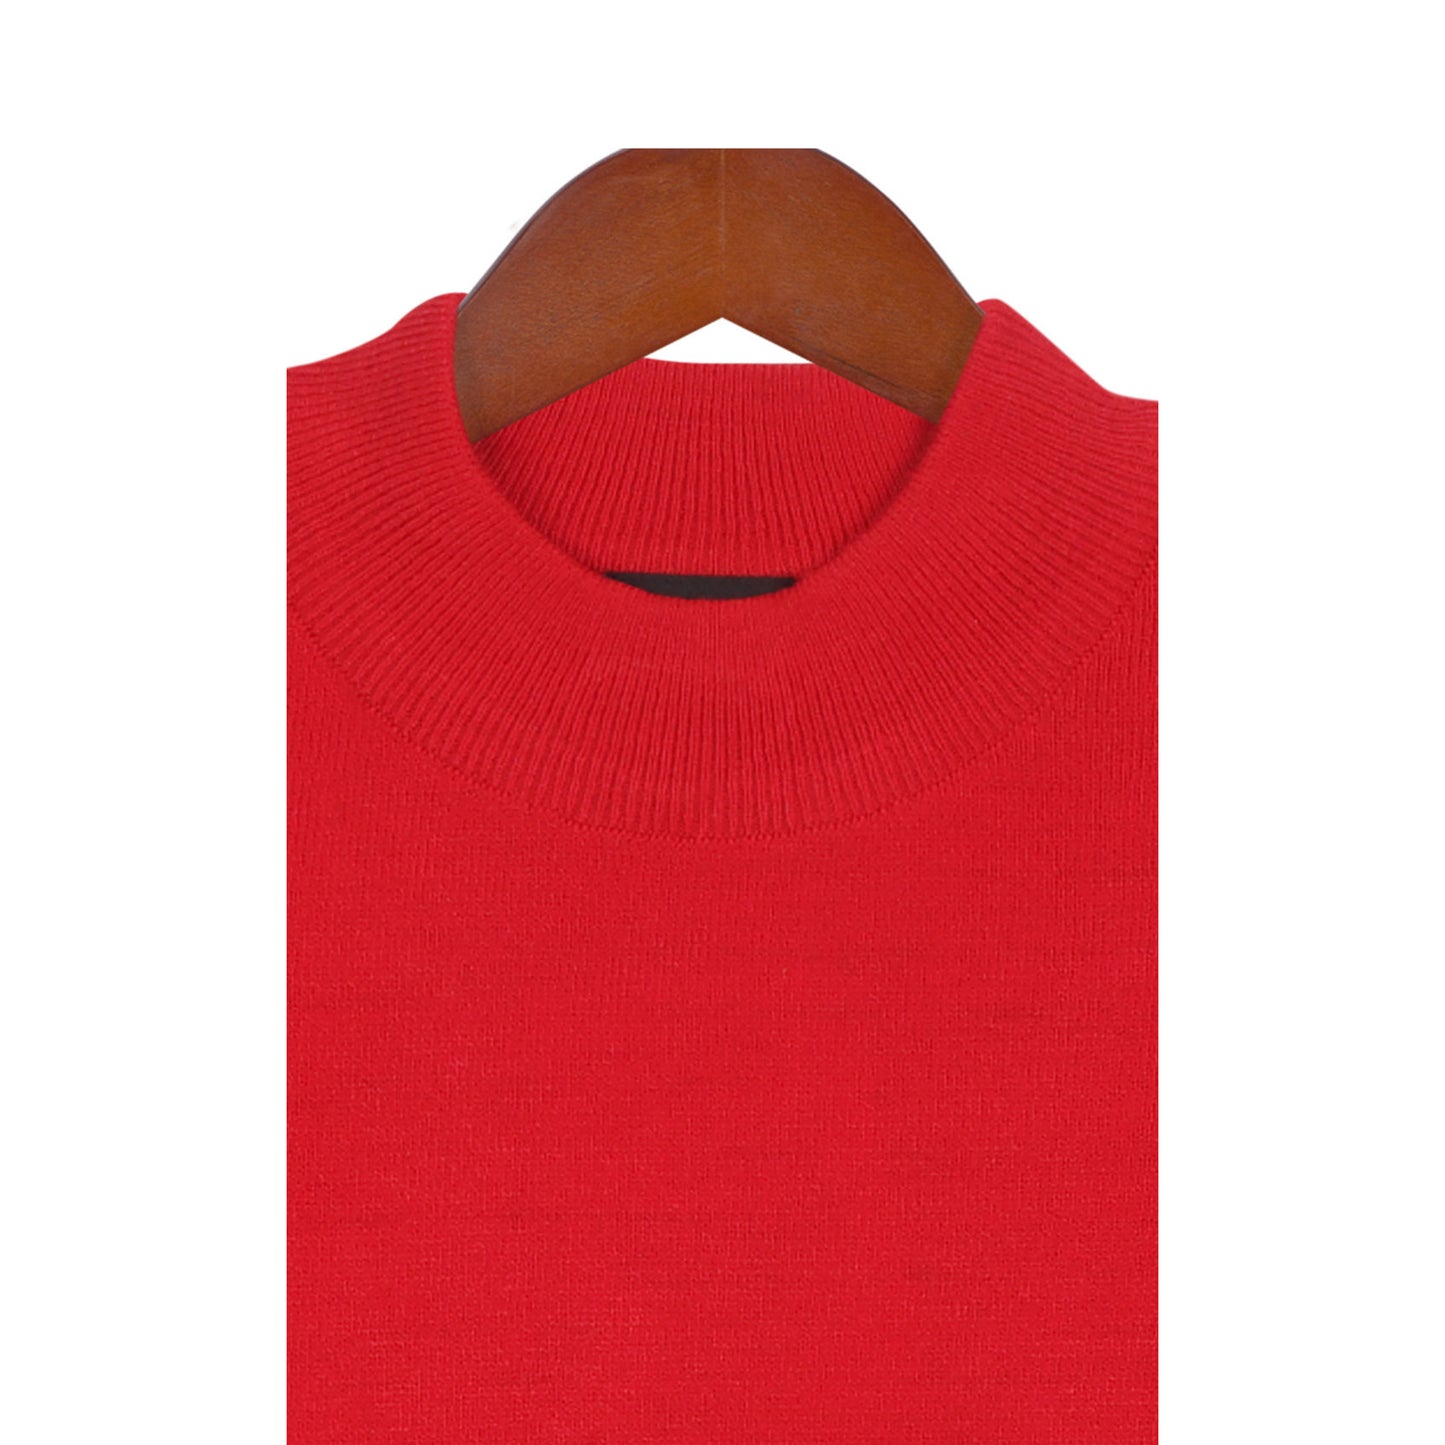 Basic Sikwi Red Sweater